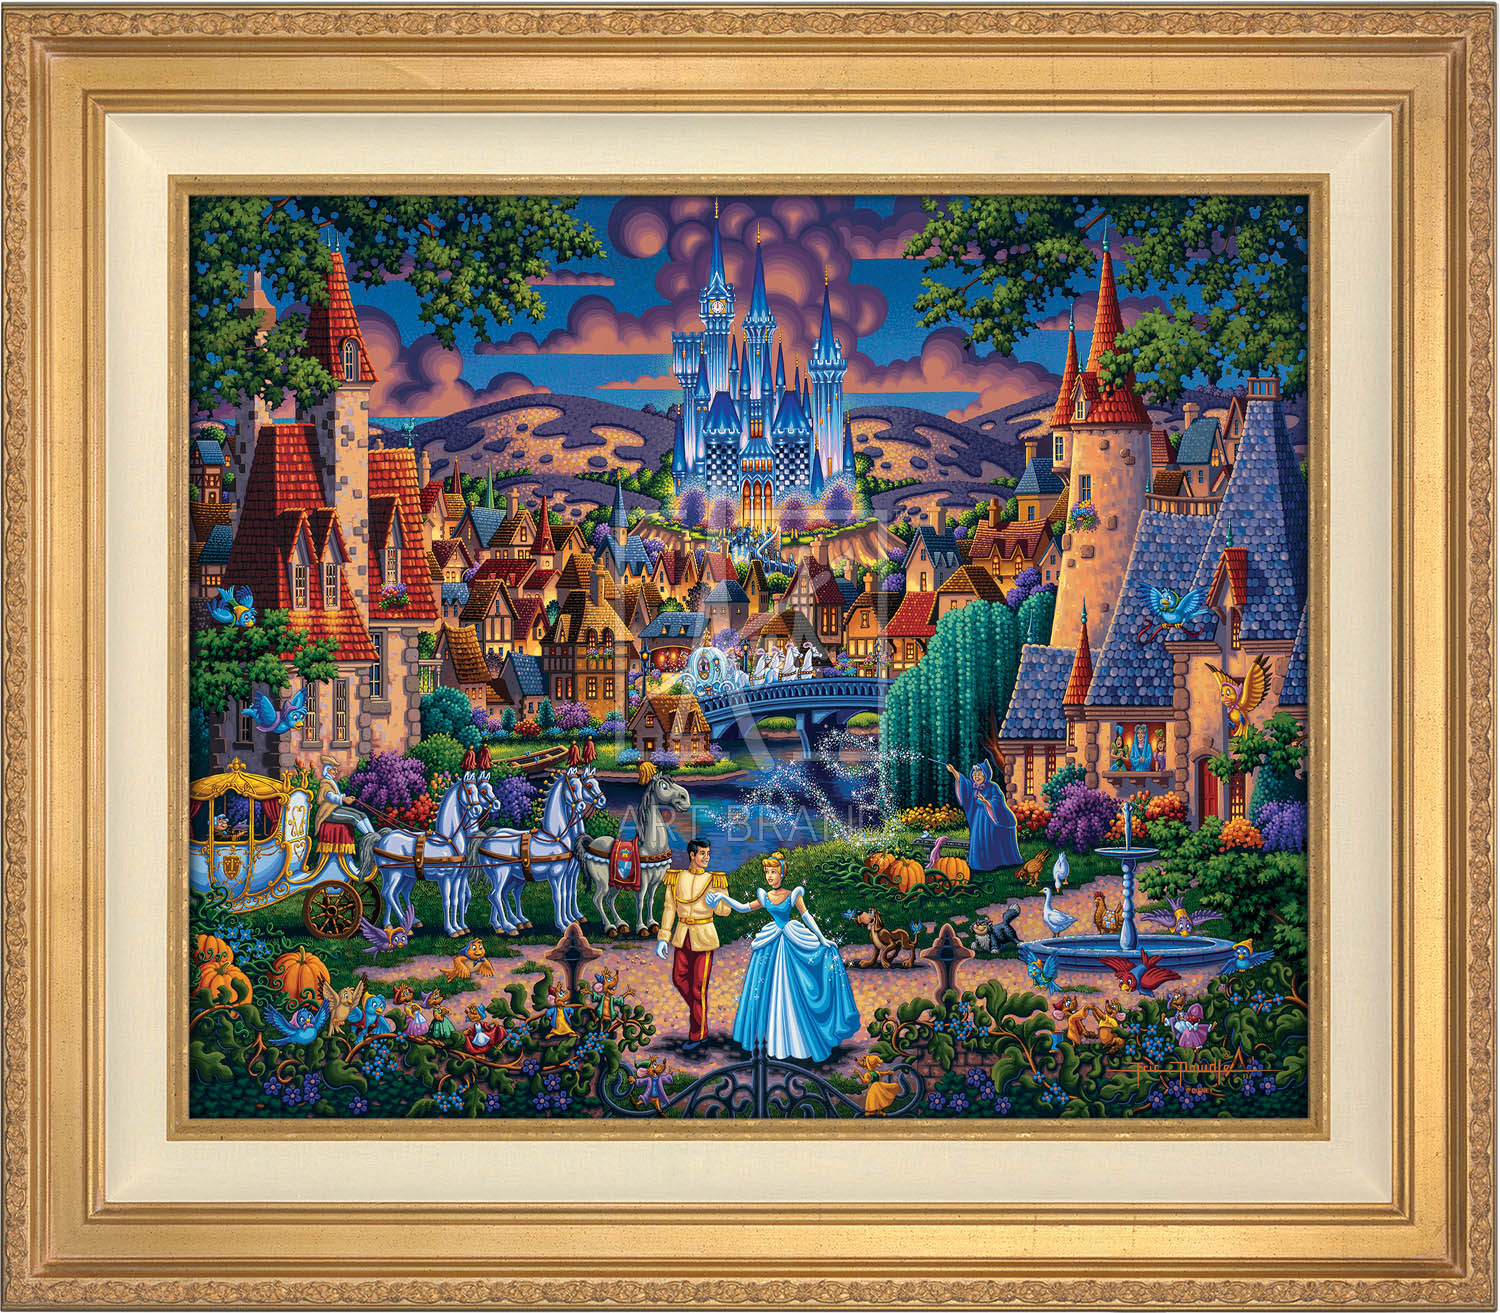 Cinderella's Enchanted Evening - 500 Piece Jigsaw Puzzle - Disney Dowdle